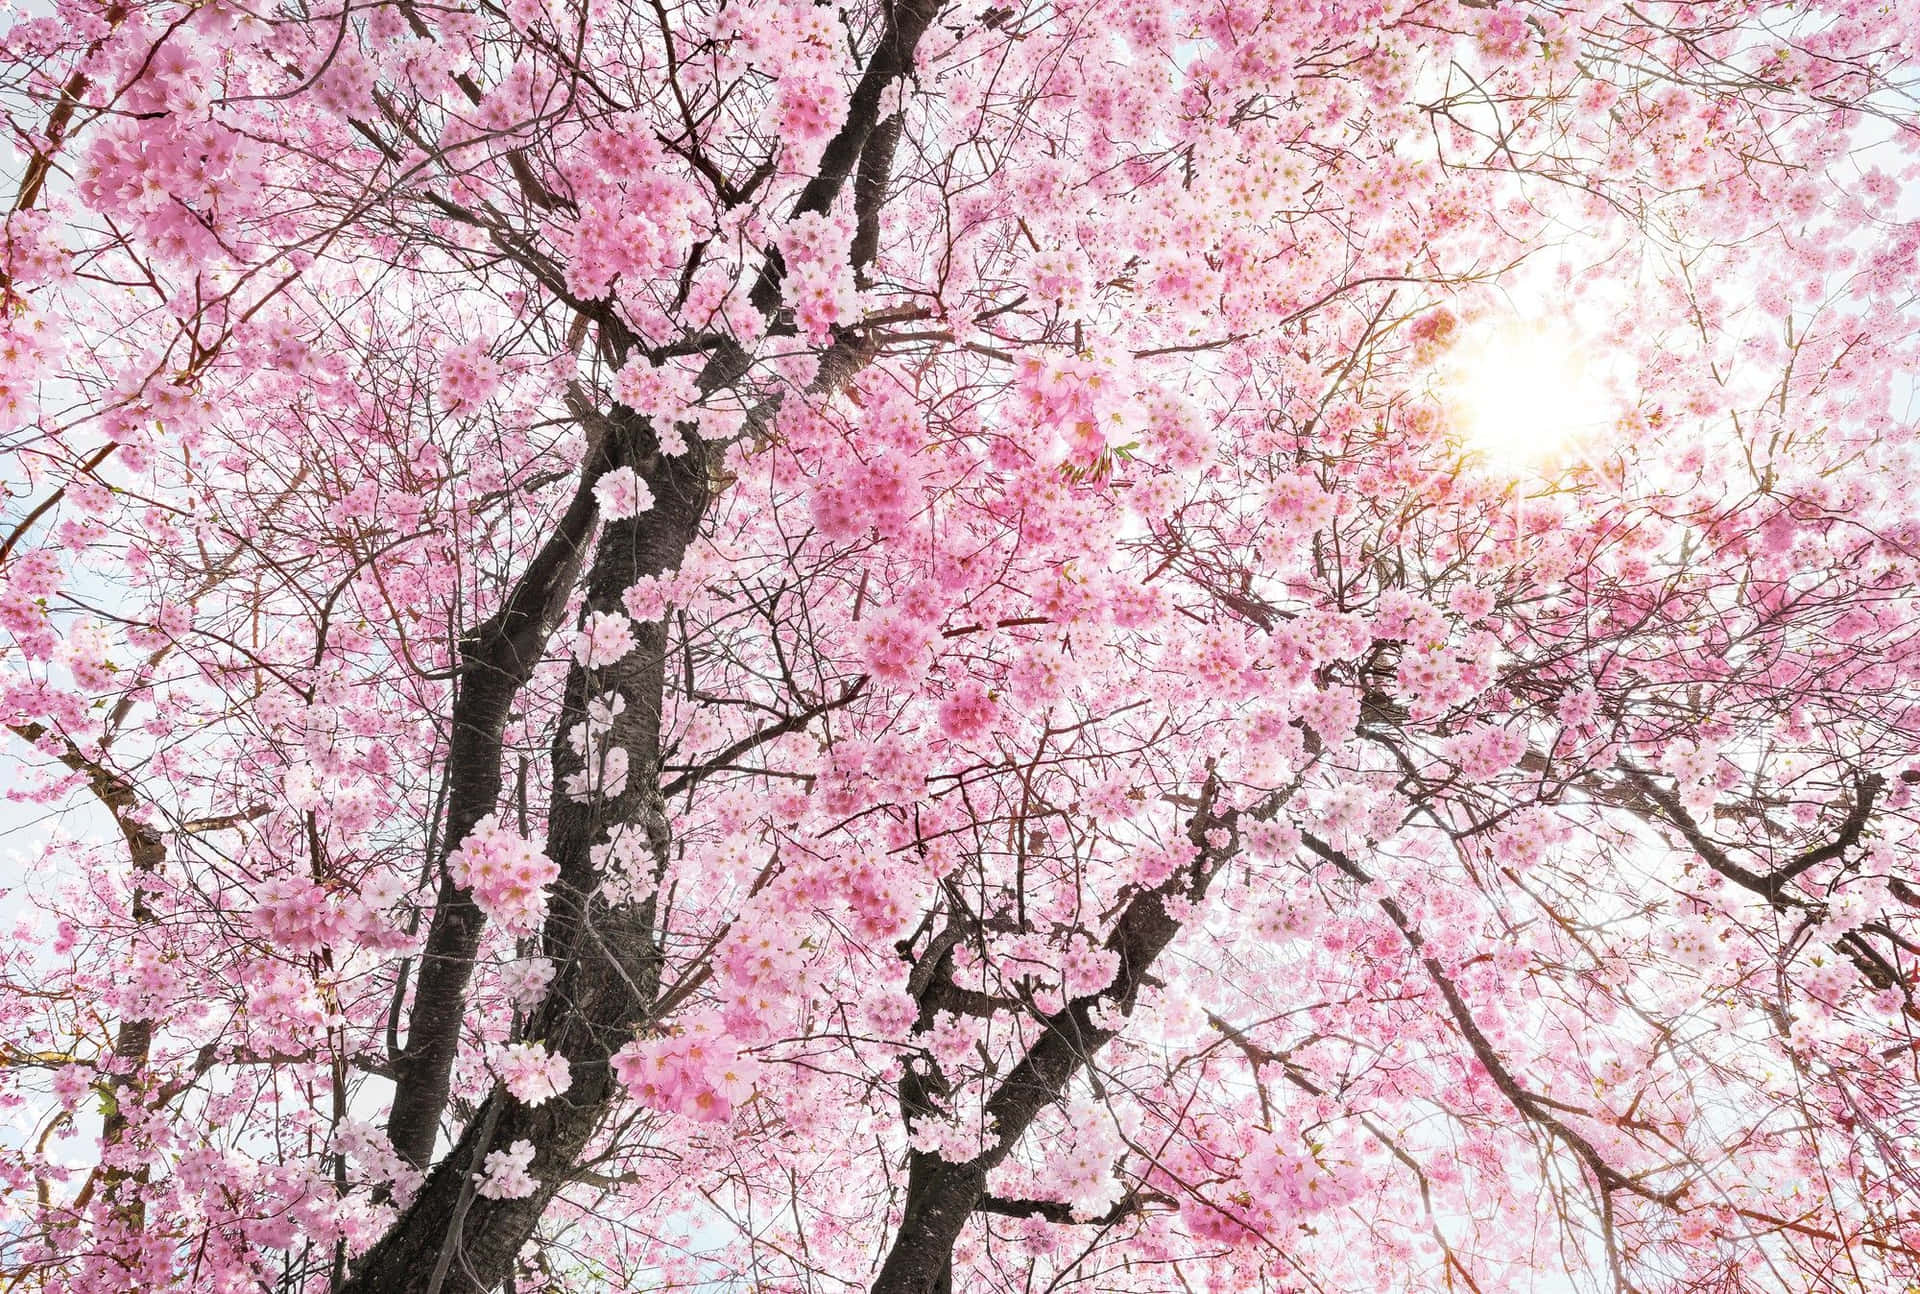 Beautiful Blooming Trees in Spring Wallpaper